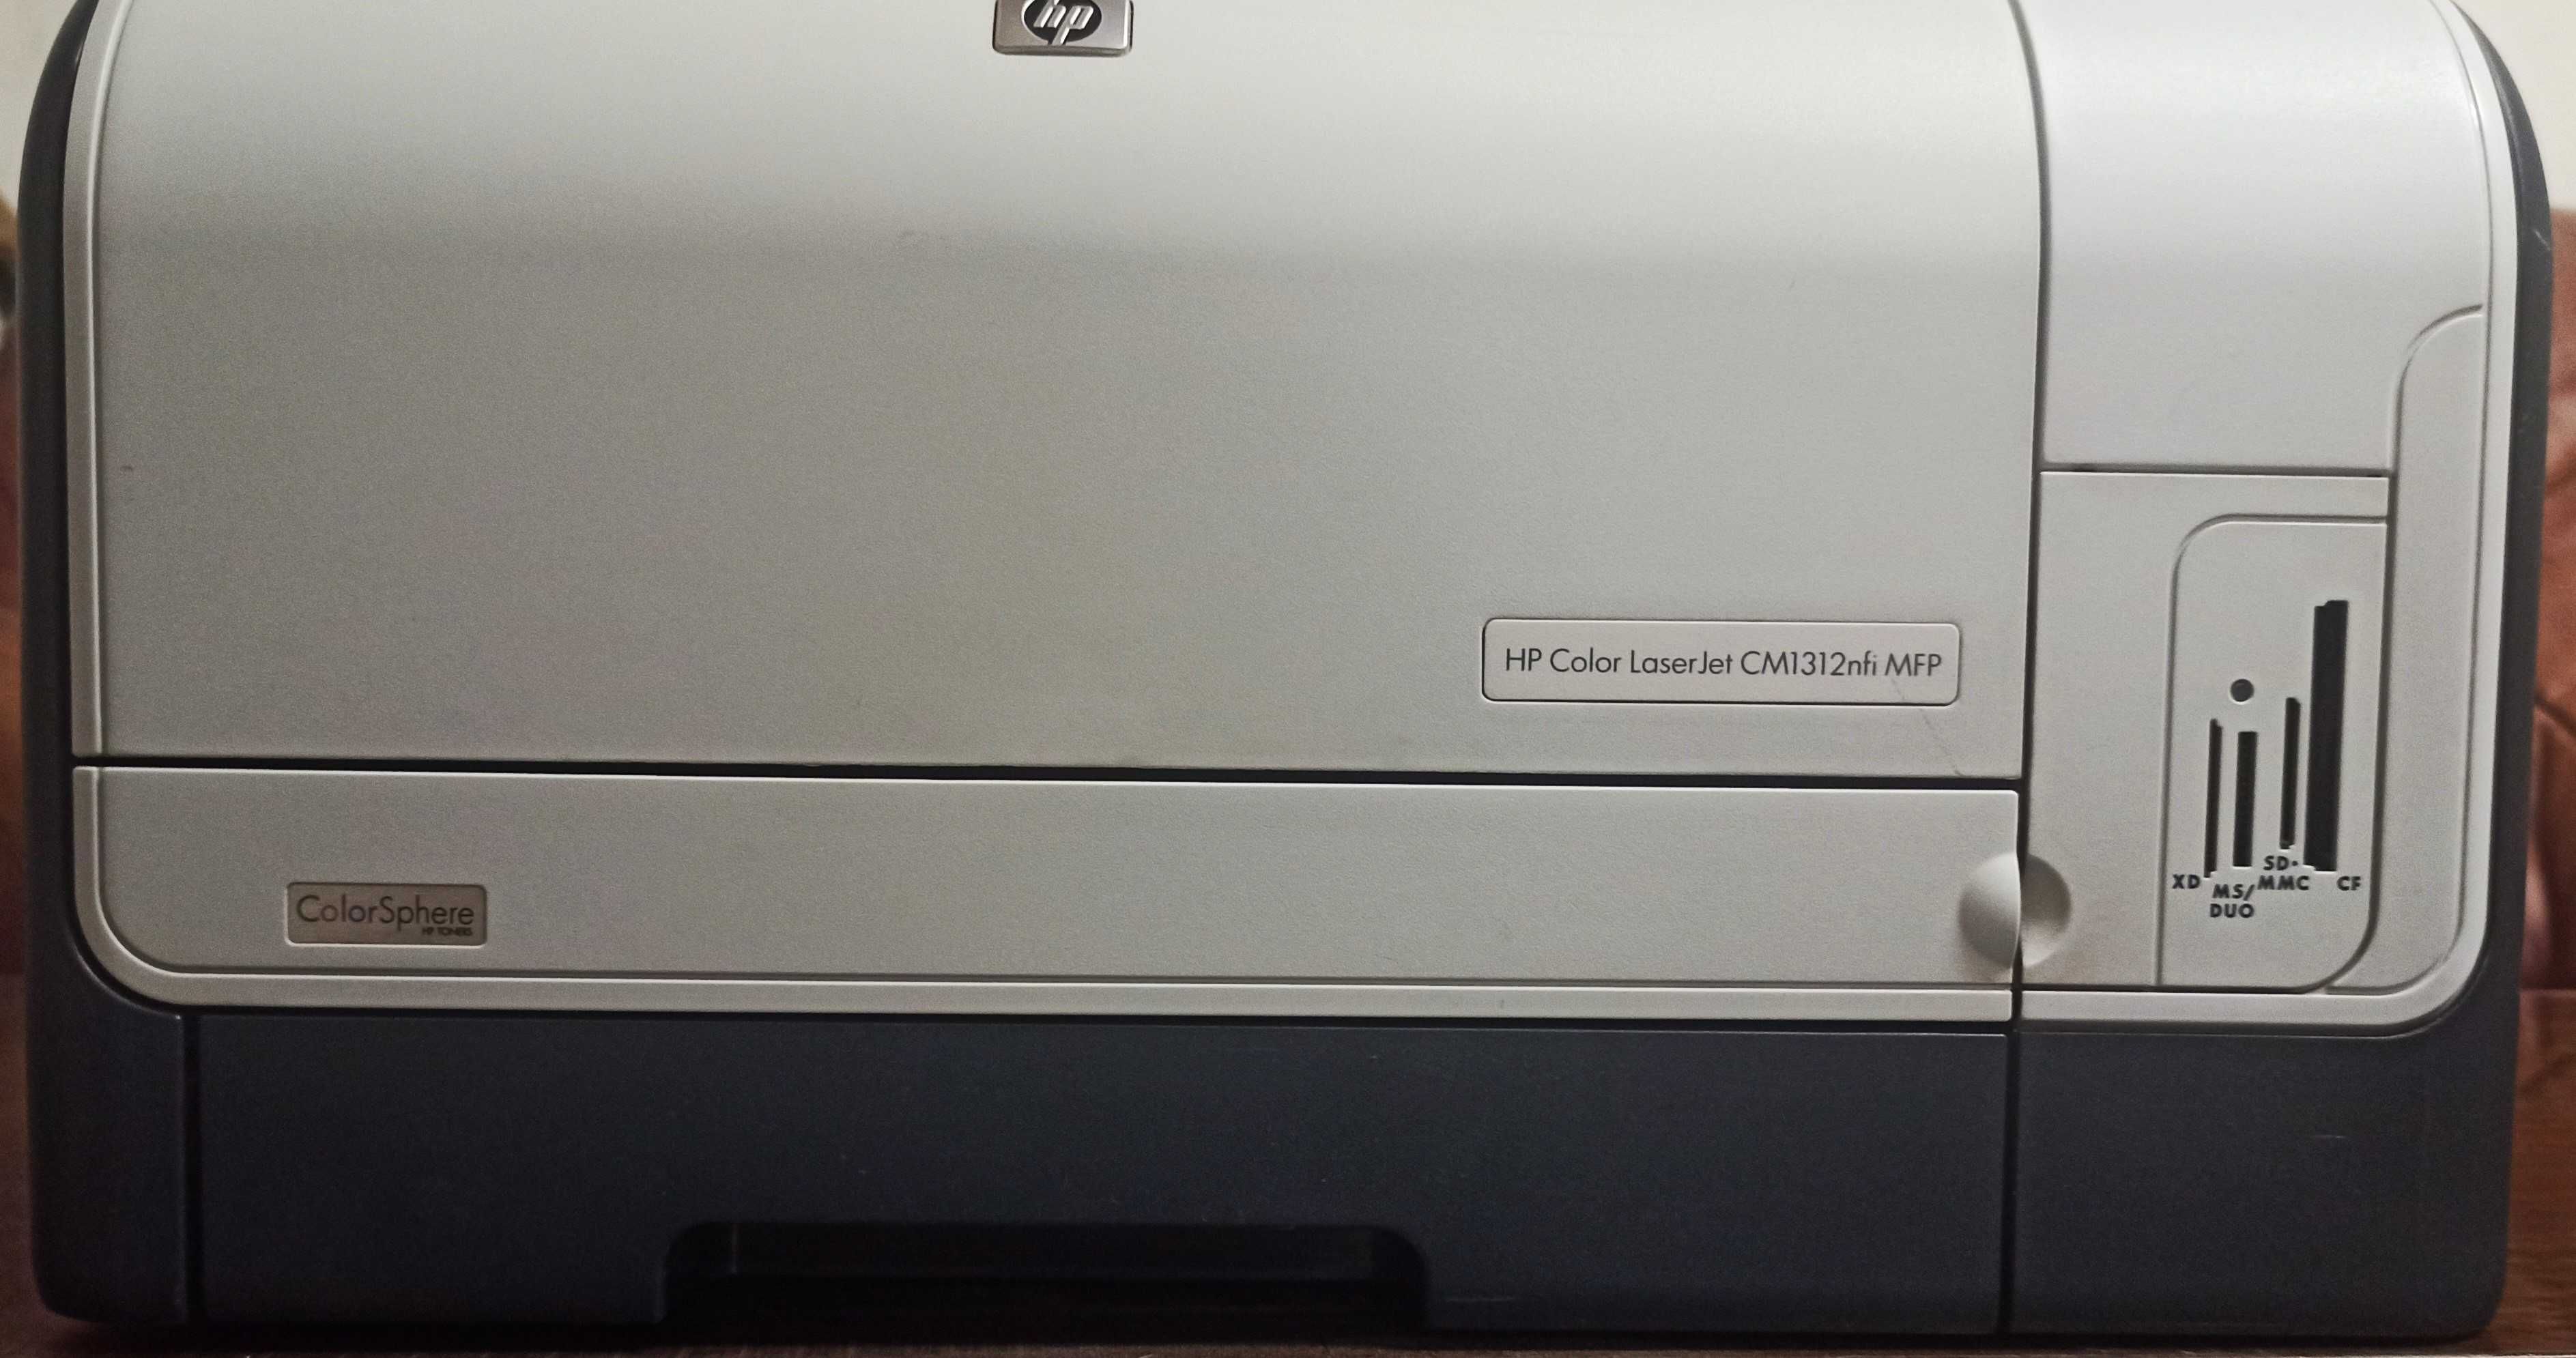 Laserowa drukarka kolorowa HP Color Laser Jet CM1312nfi MFP sprawna